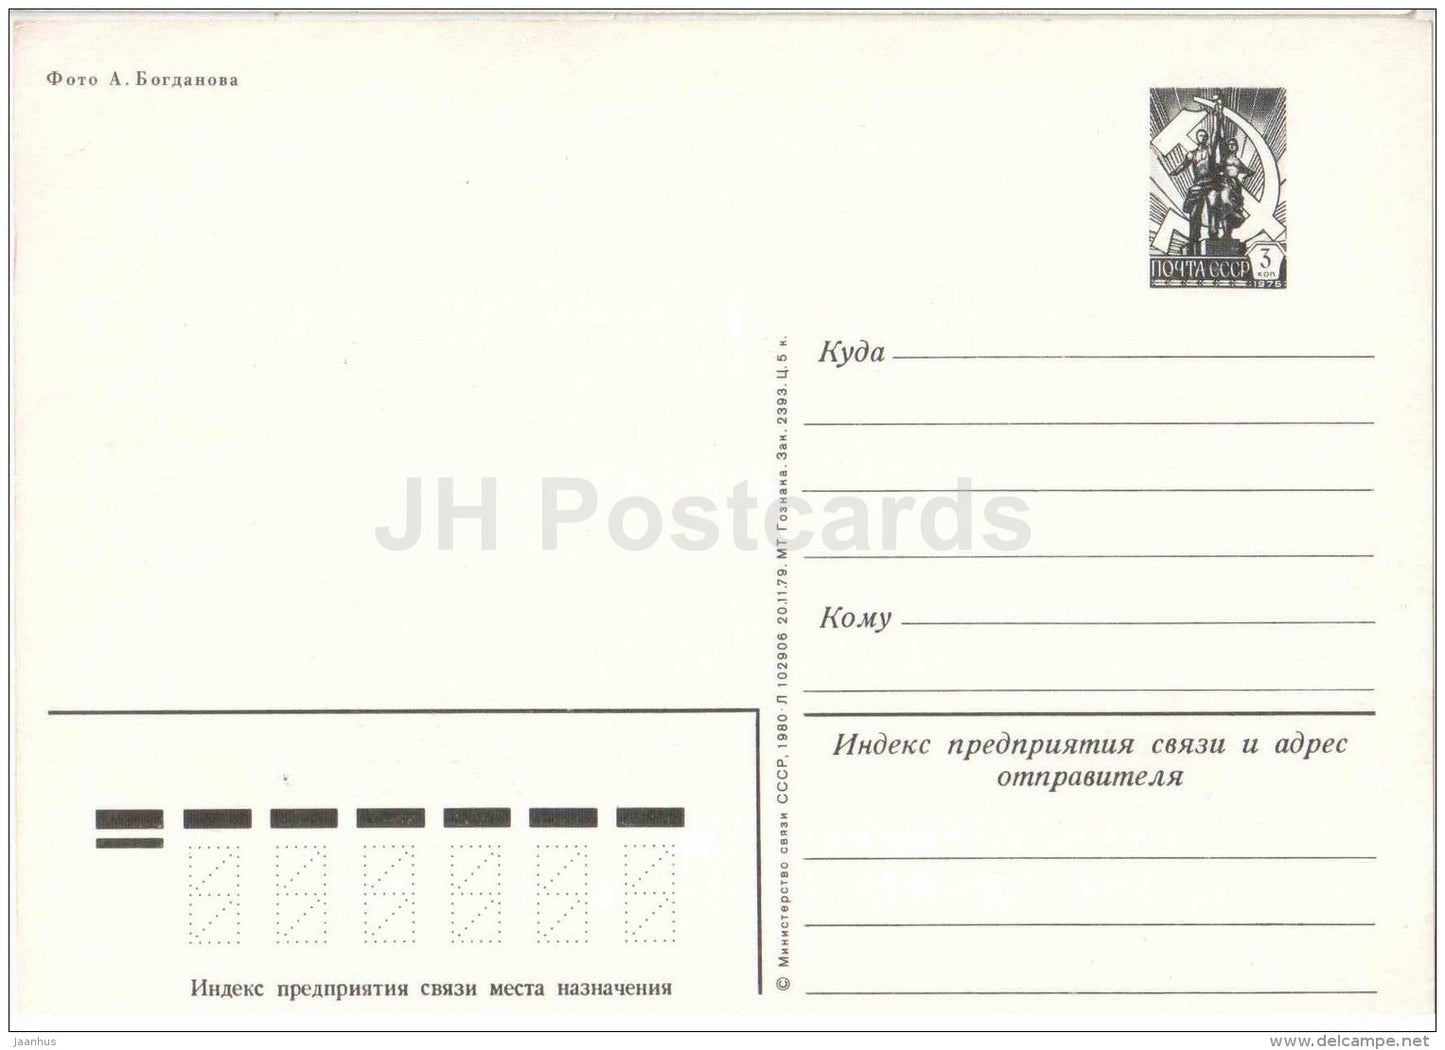 beach - Sukhumi - Abkhazia - postal stationery - 1980 - Georgia USSR - unused - JH Postcards